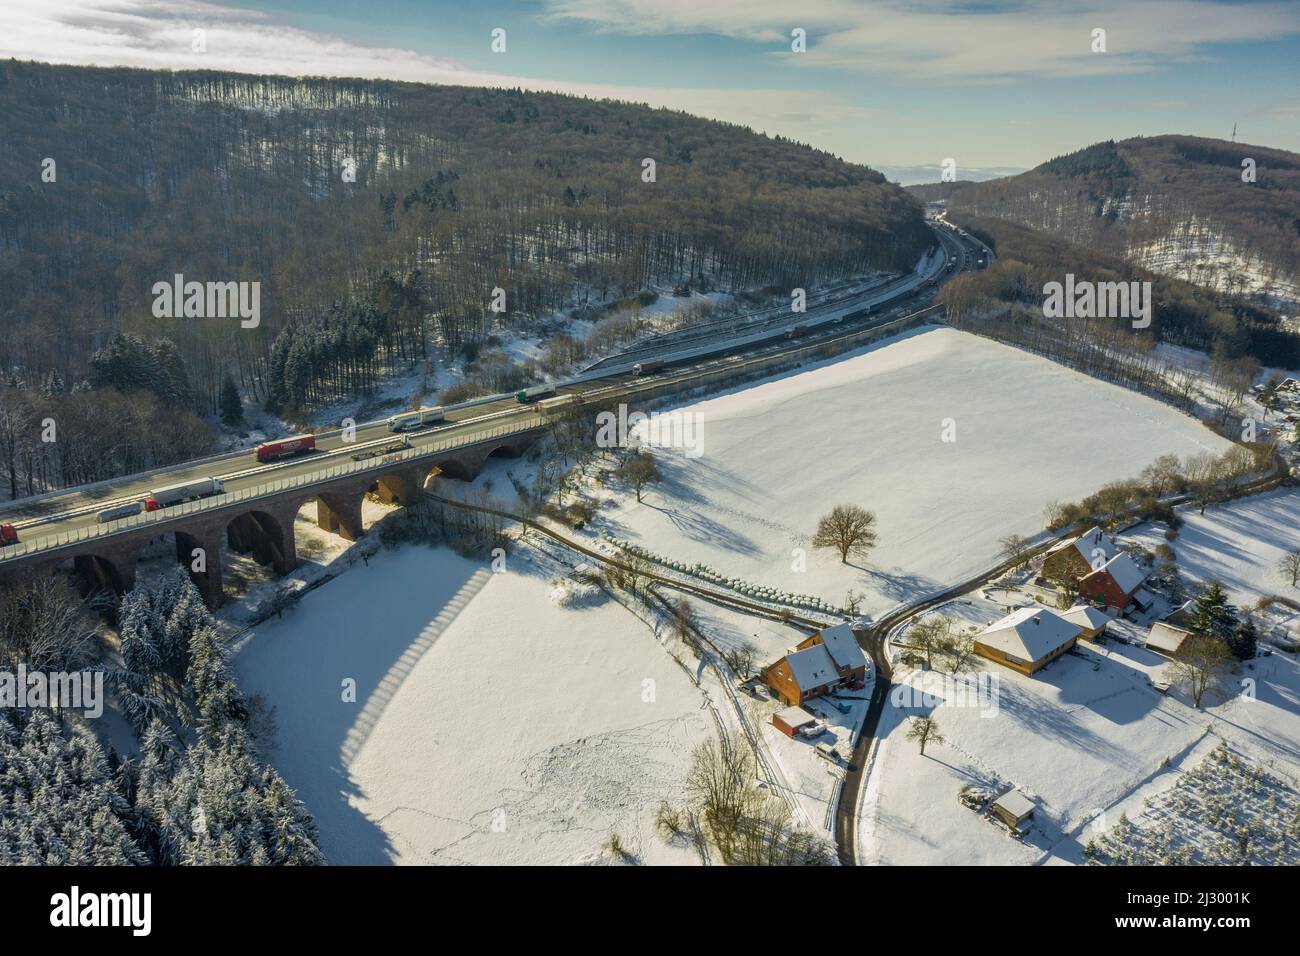 A2 near Bückeburg, snow-covered slopes of the Weser Mountains, Schermbeck valley bridge, German motorway Stock Photo